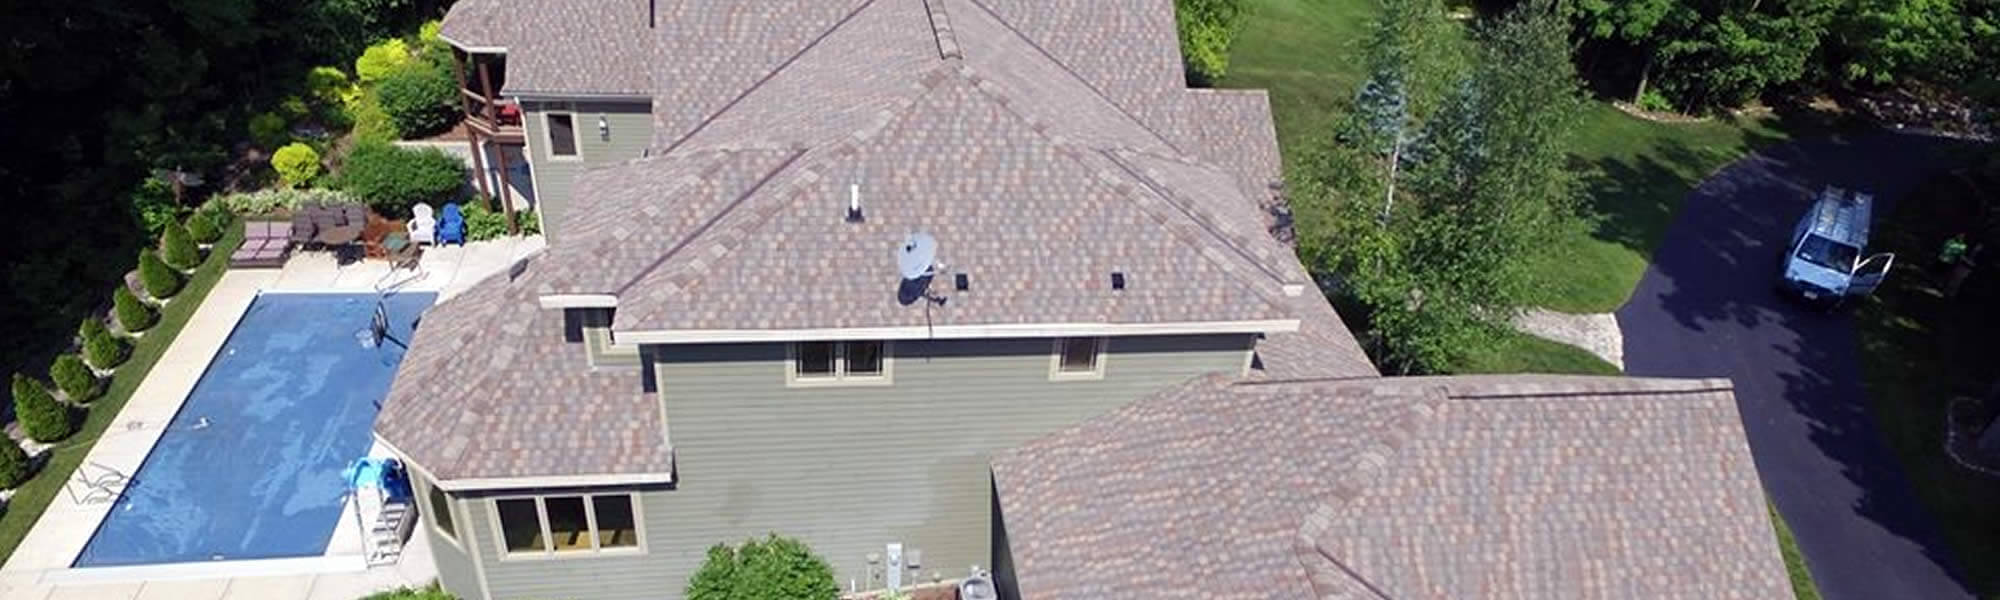 testimonials Roofing / Siding / Windows / Doors / Gutters / Repairs